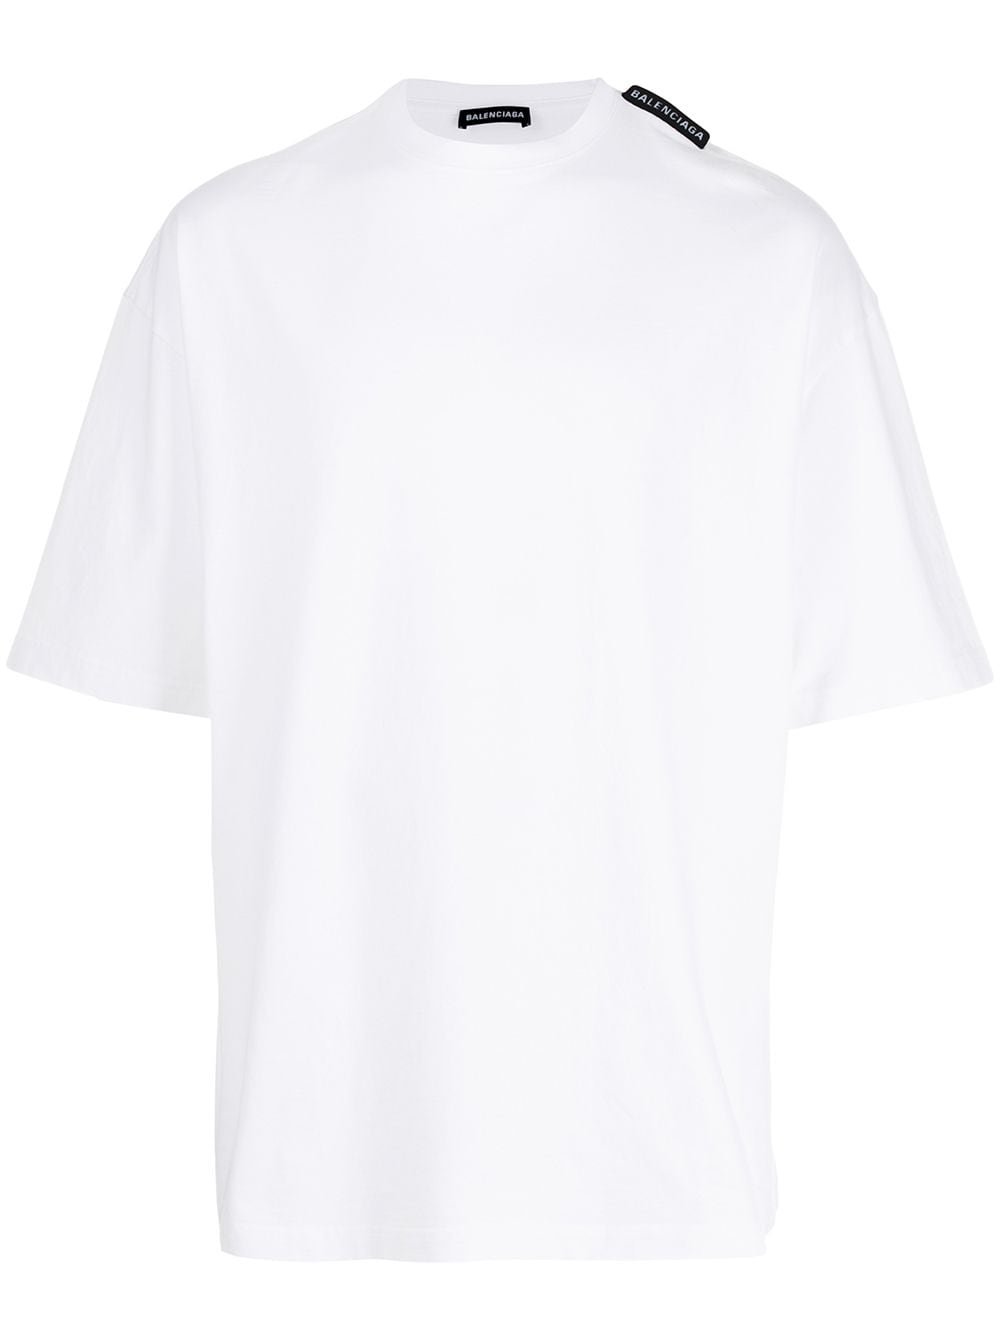 Balenciaga logo tab T-shirt - White